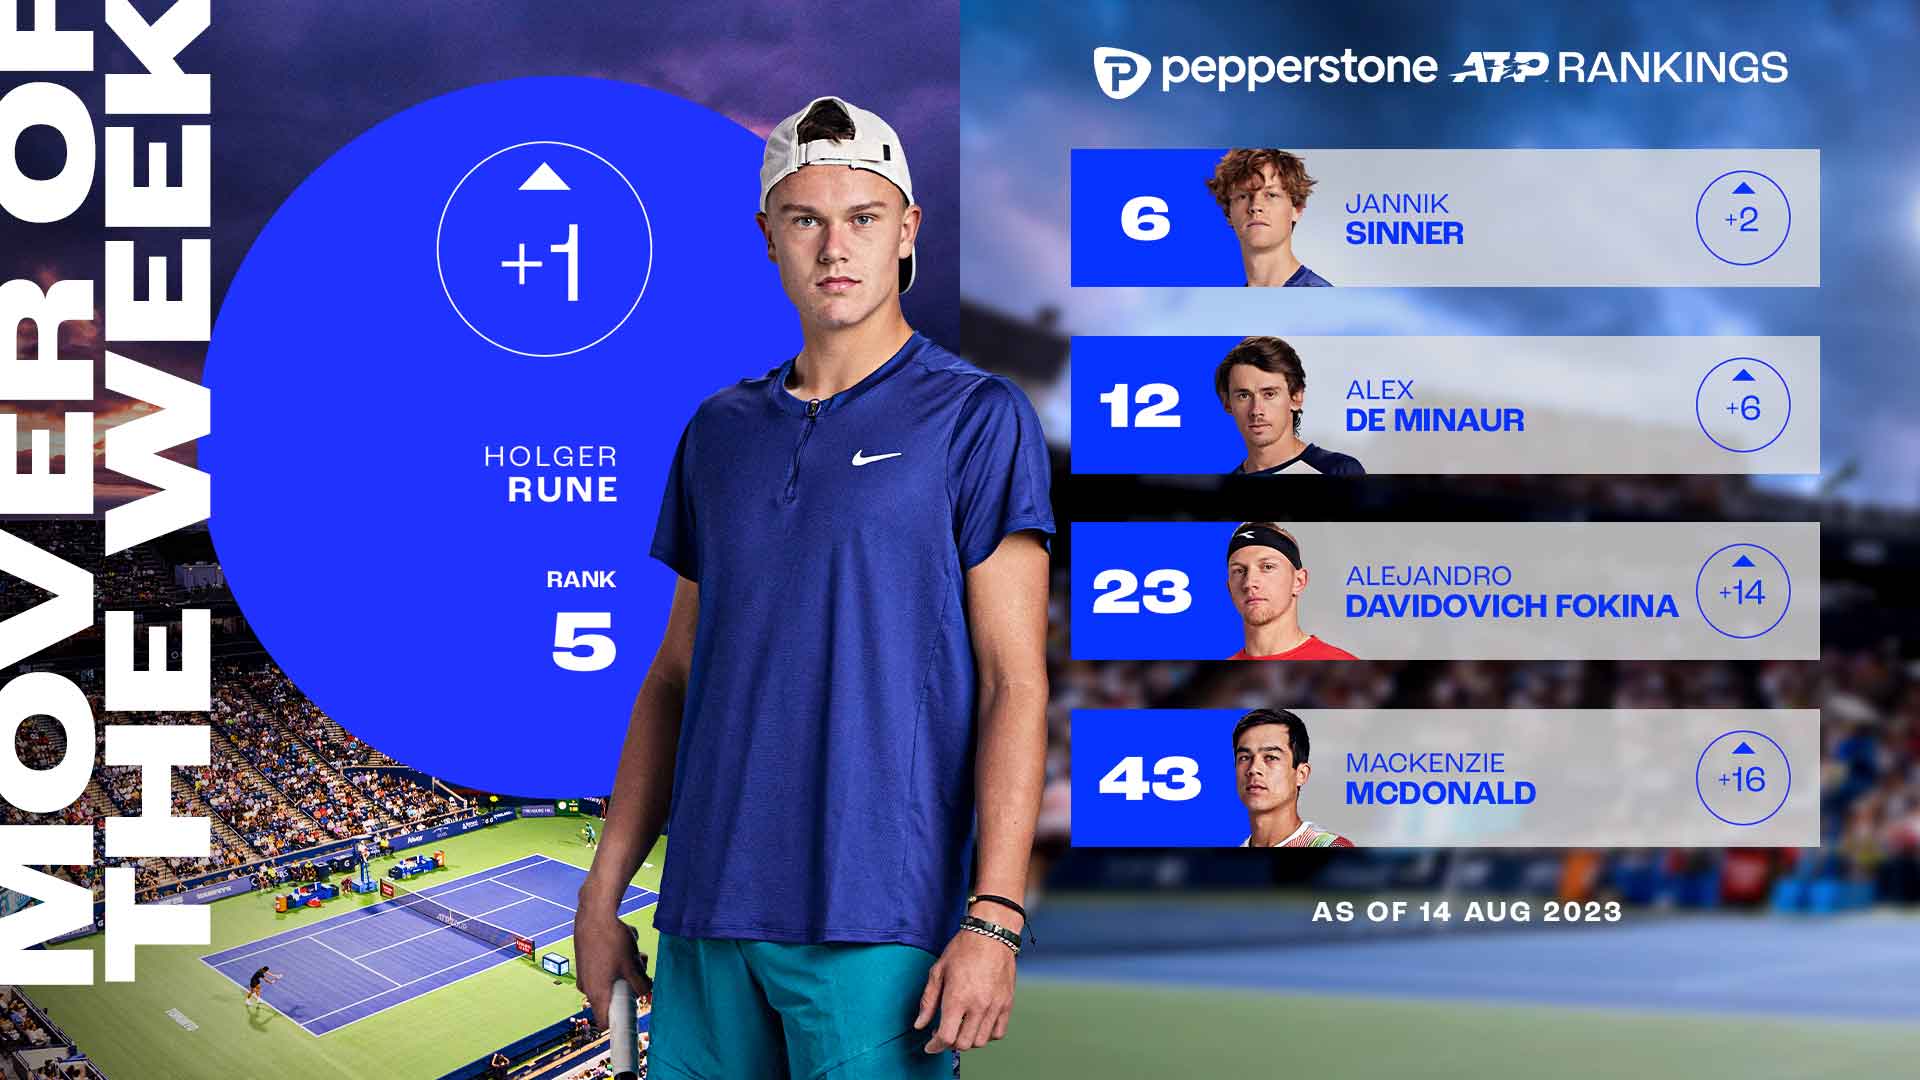 Rankings, Pepperstone ATP Doubles Teams Rankings